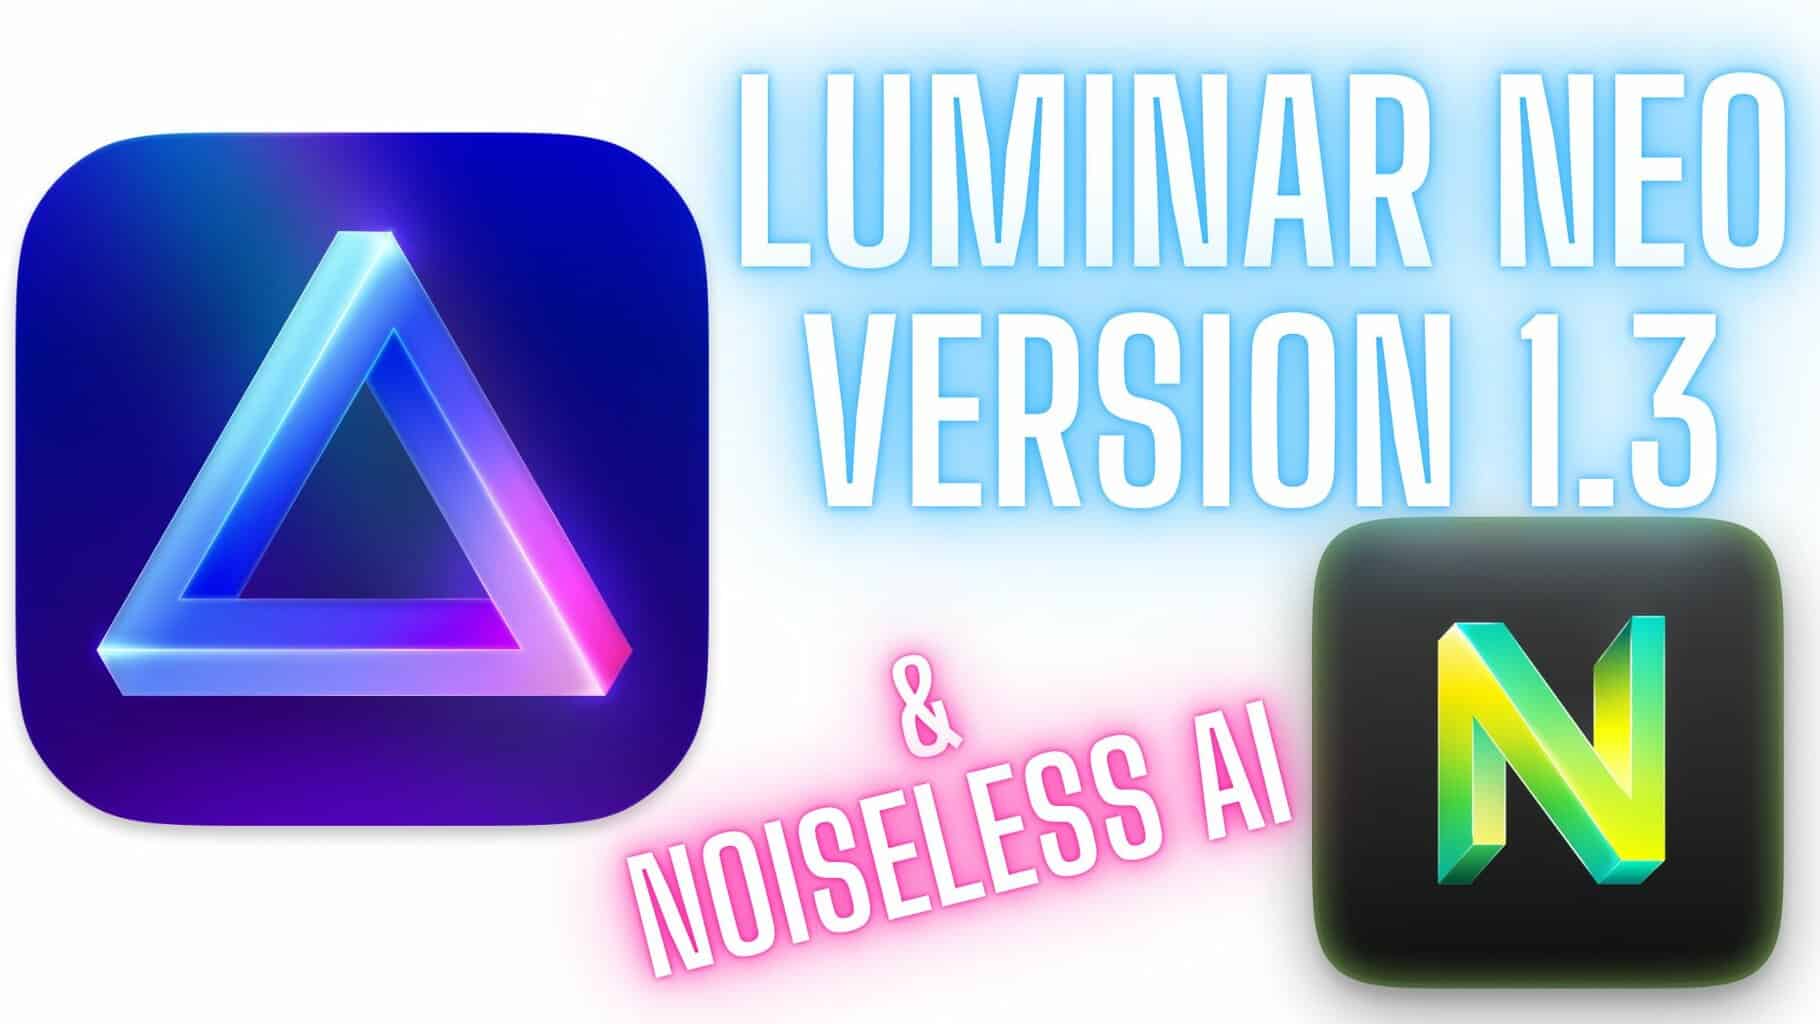 Luminar Neo version 1.3 Update Noiseless AI released